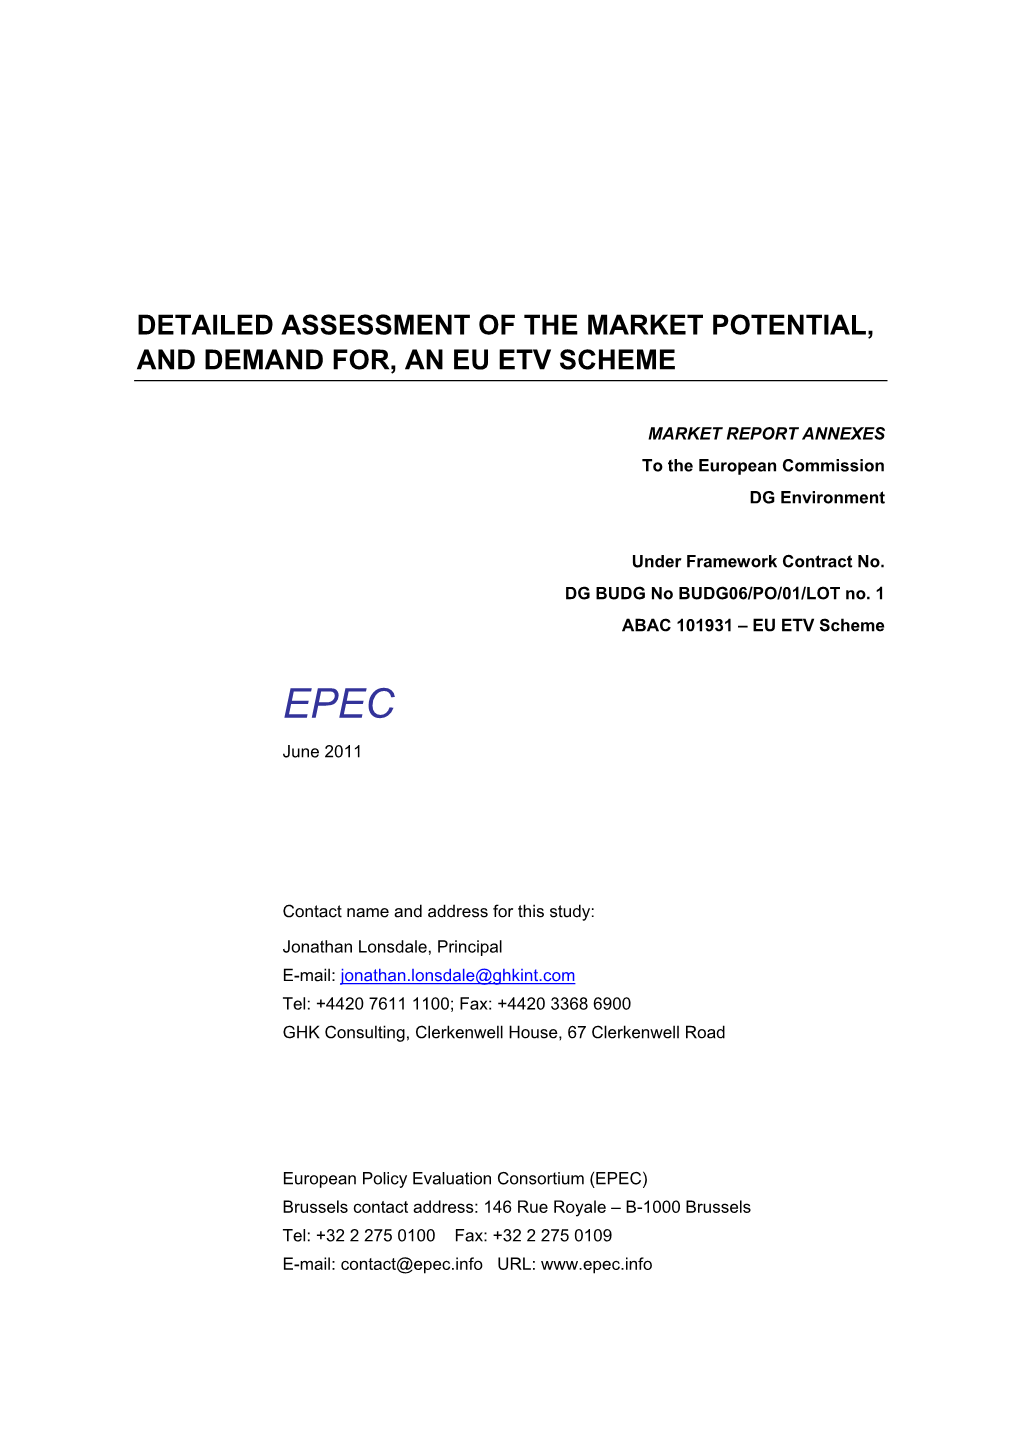 Market Potential, and Demand For, an Eu Etv Scheme